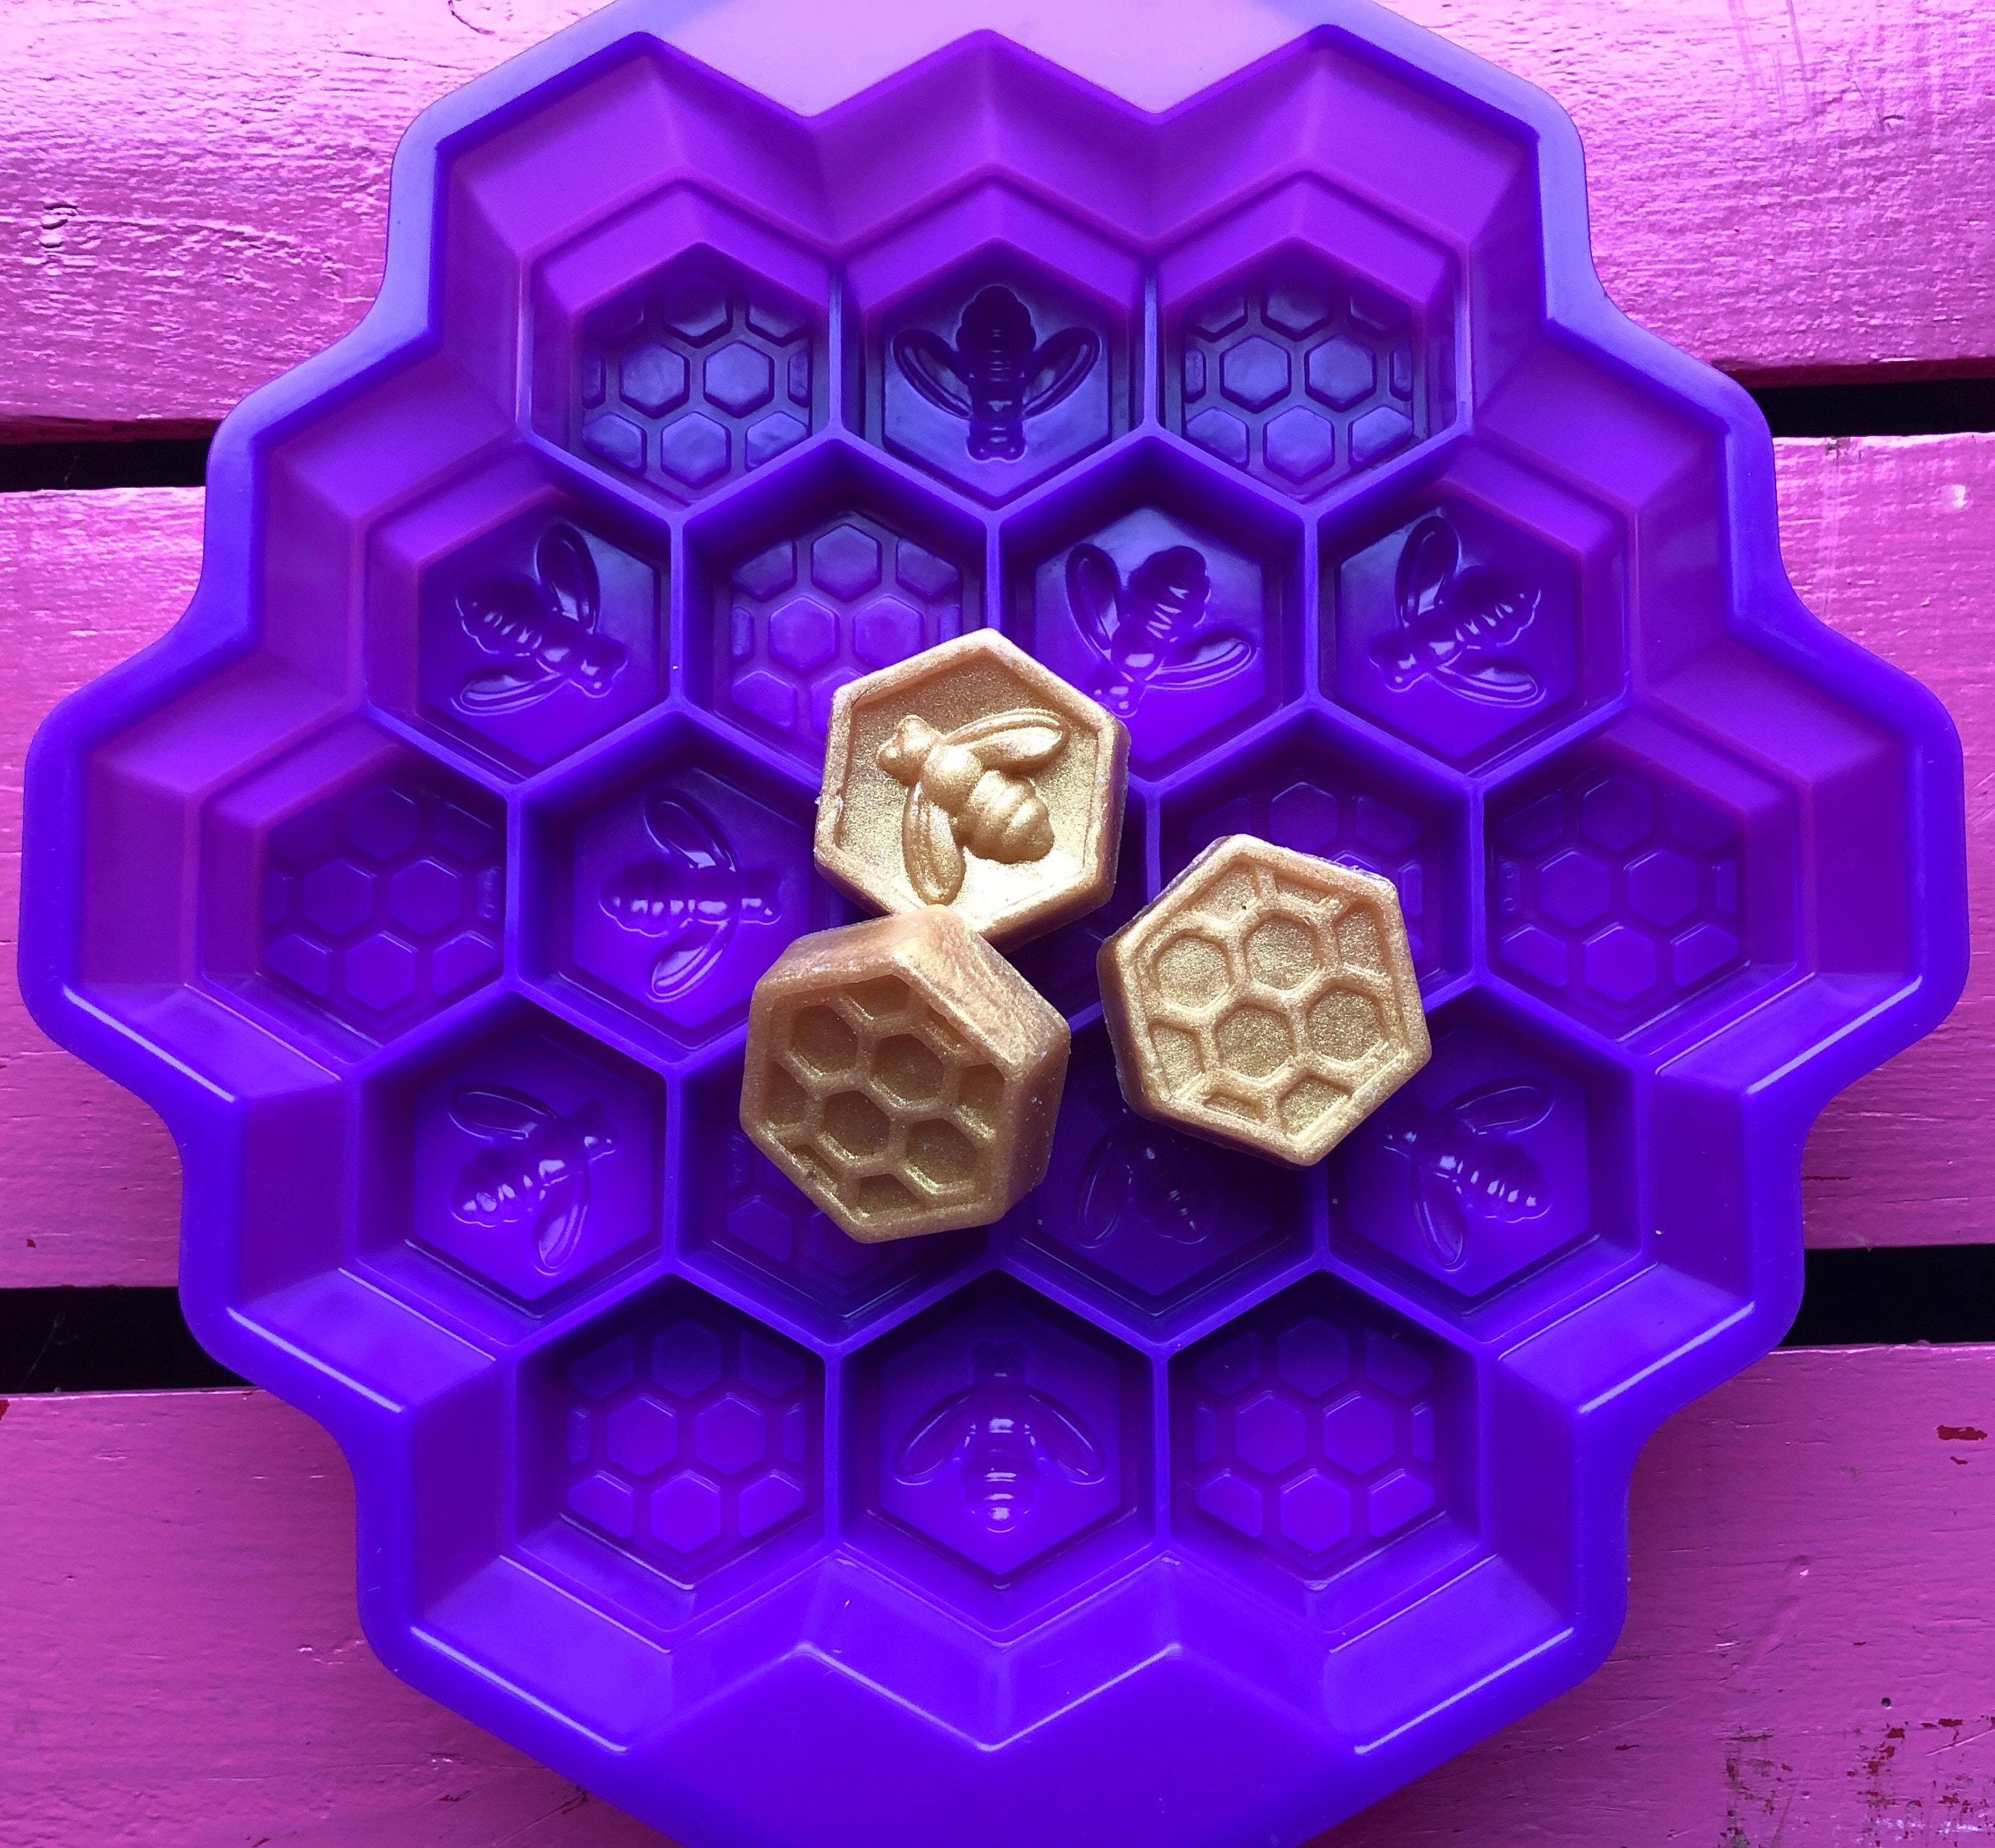 Octagon Honeycomb Soap Wax Mold